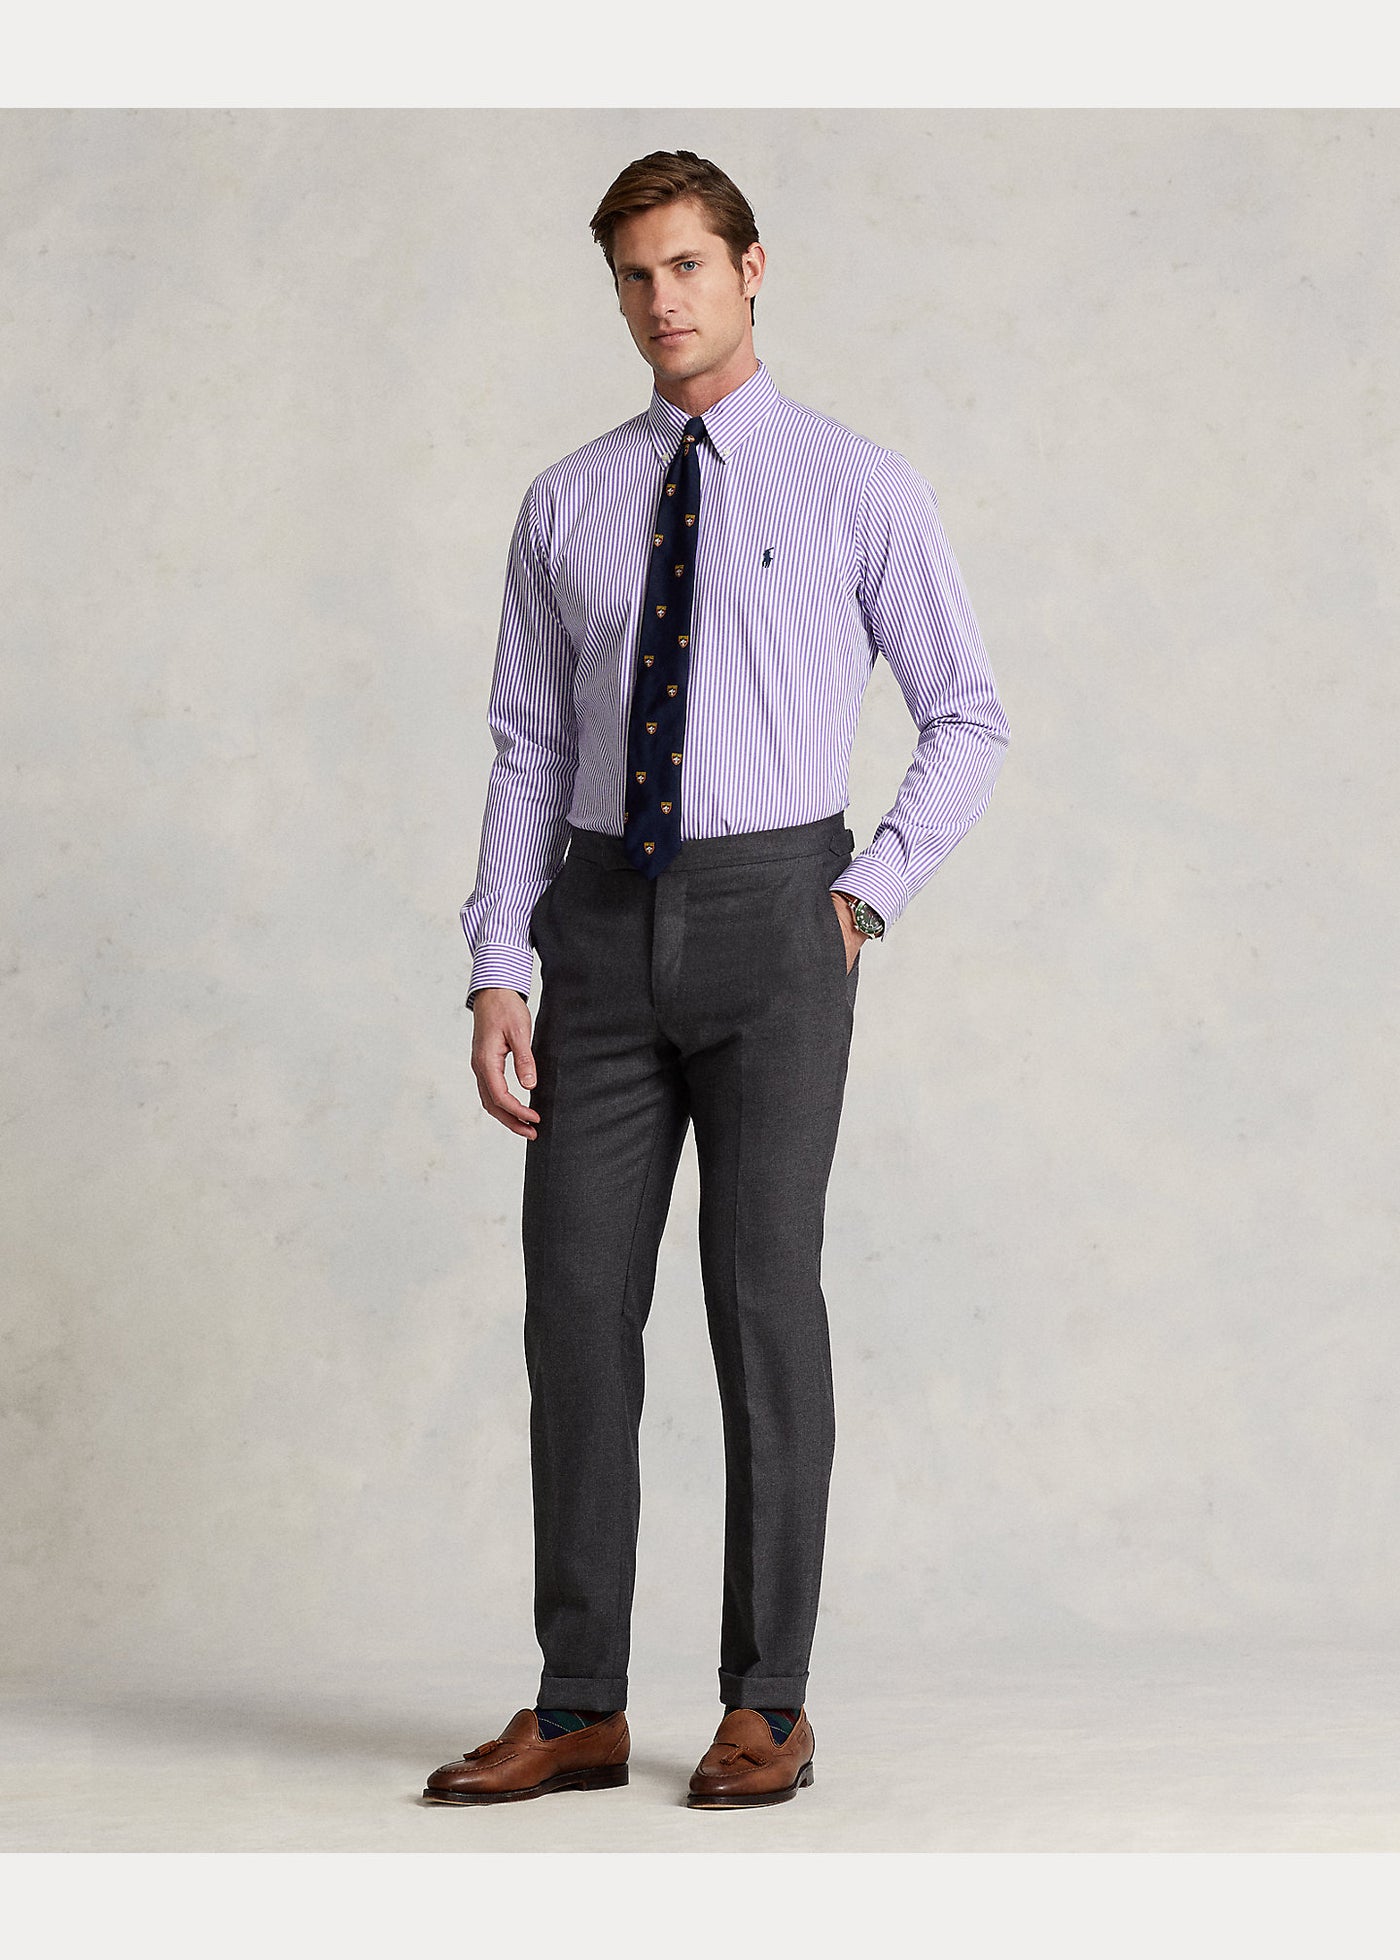 Ralph Lauren Custom Fit Striped Stretch Poplin Shirt | Lavender/White